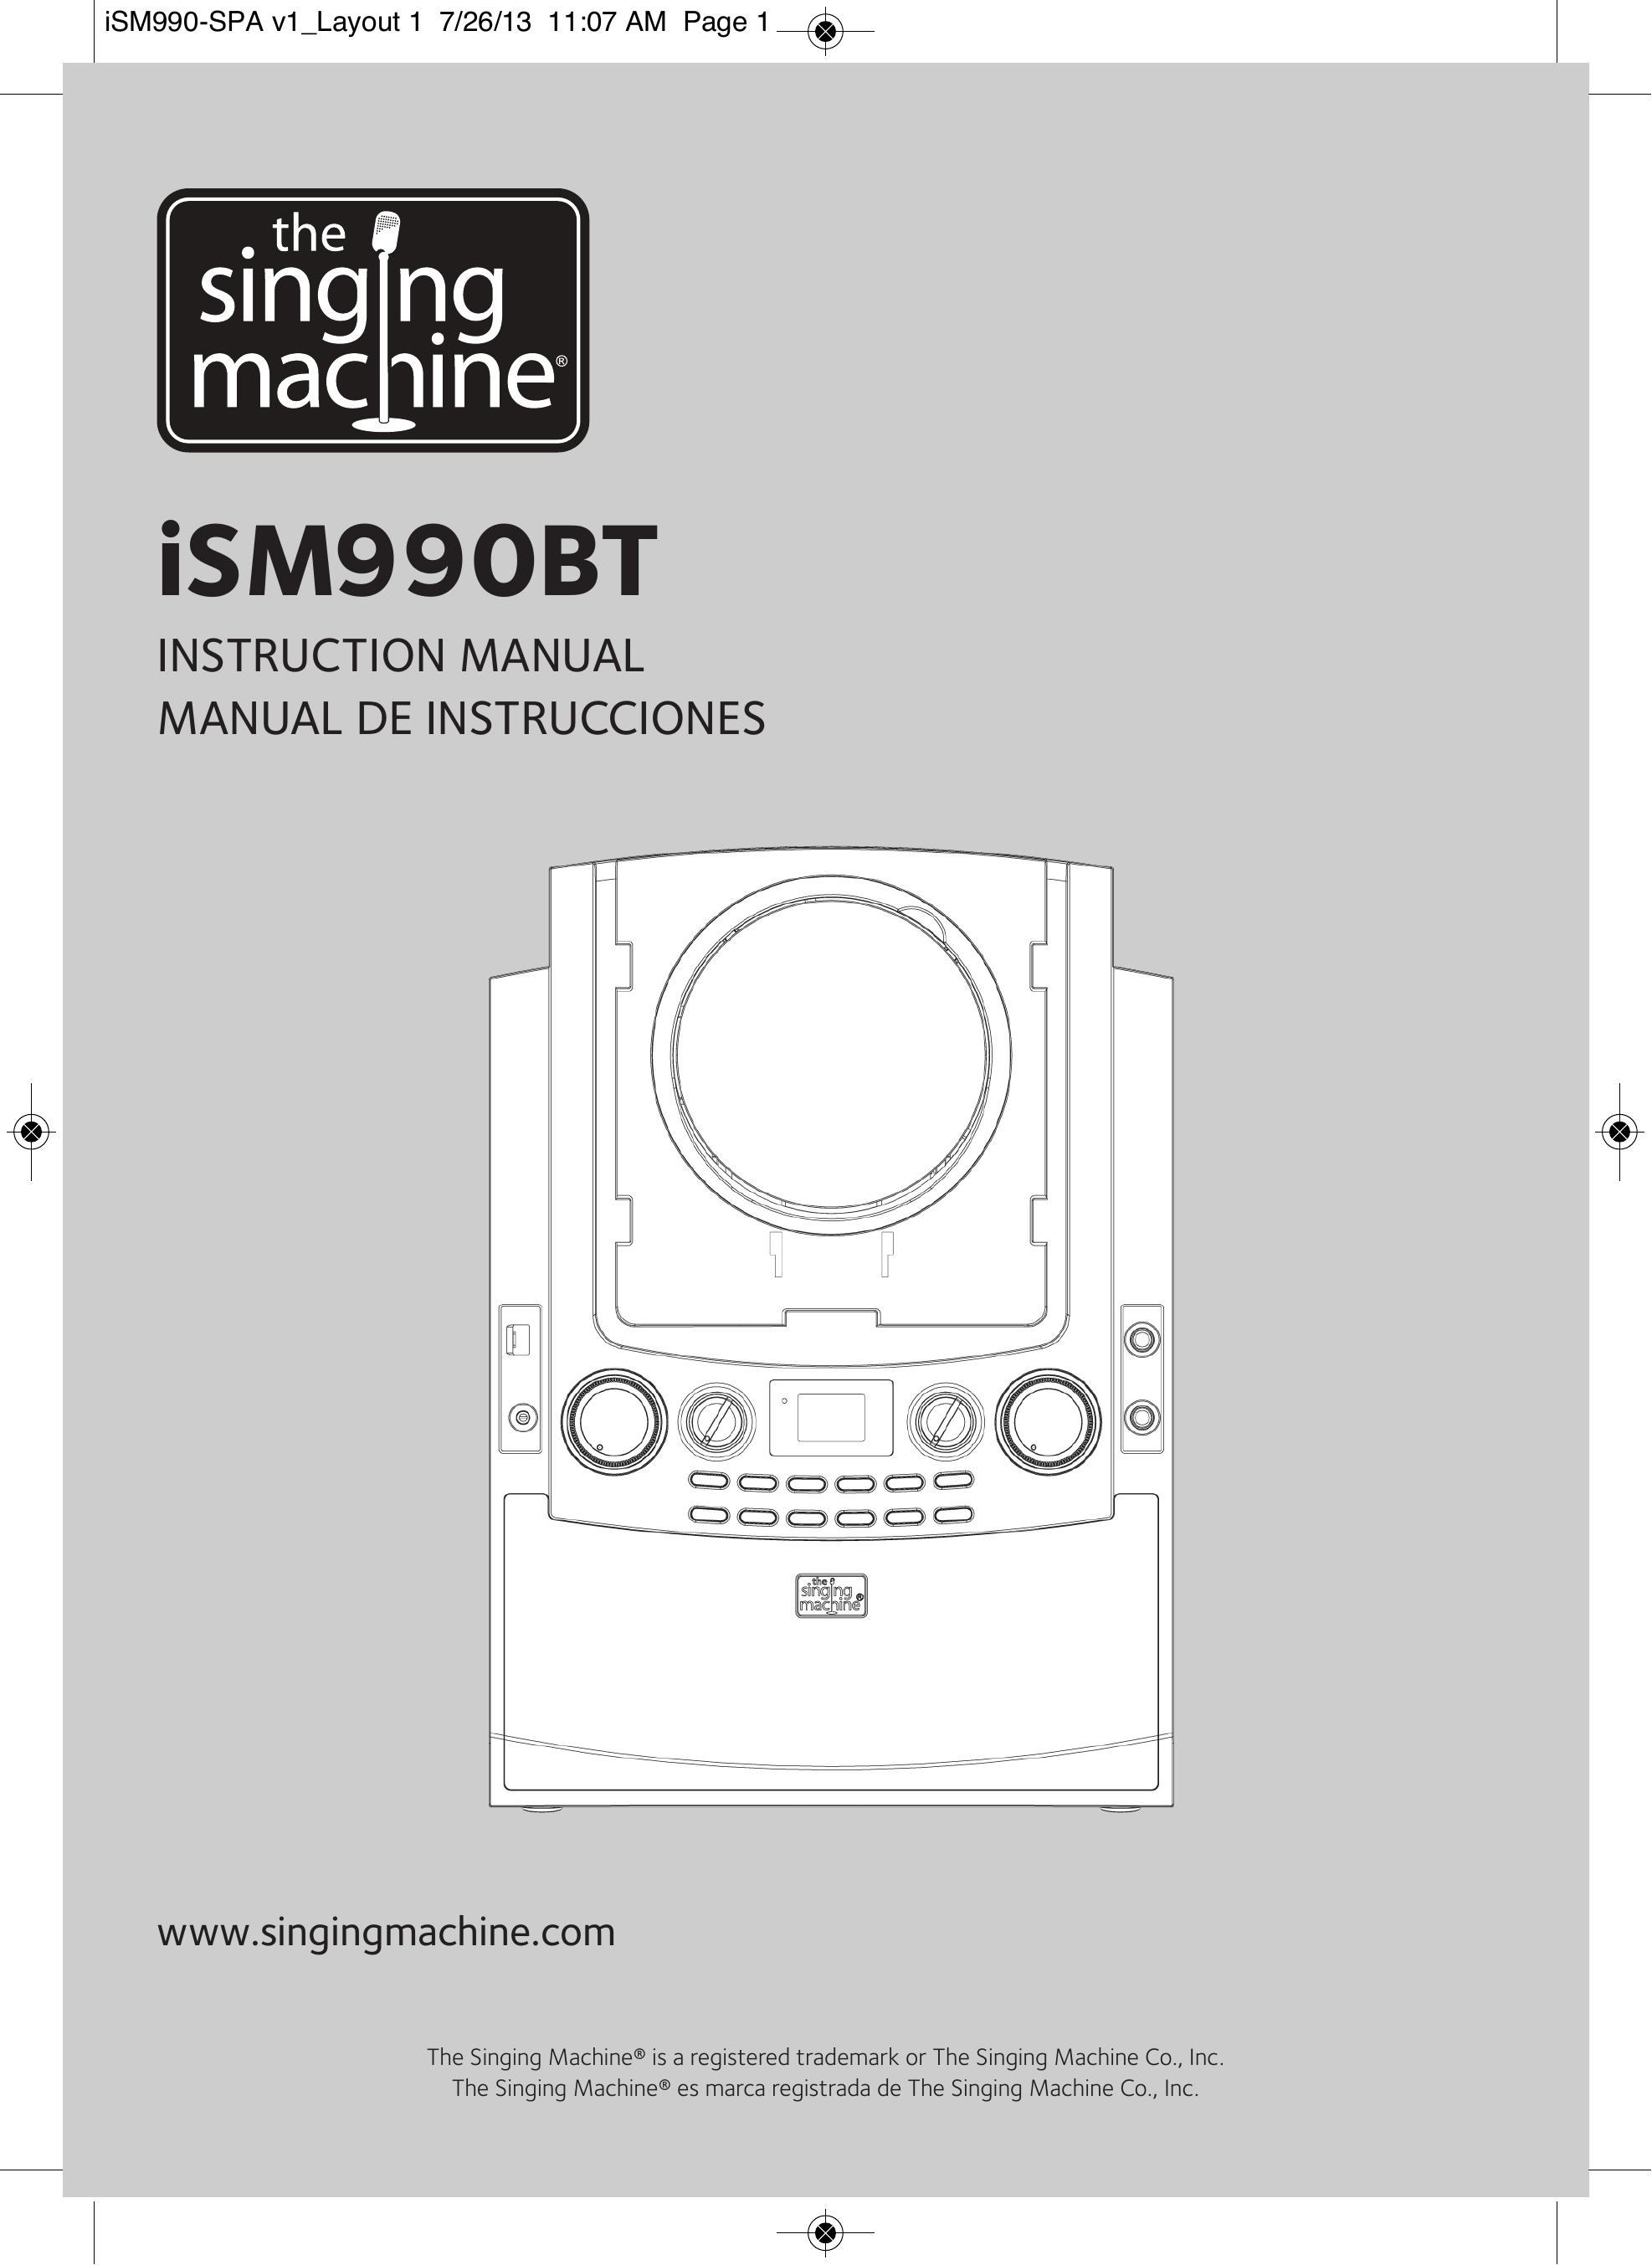 The Singing Machine iSM990BT Karaoke Machine User Manual